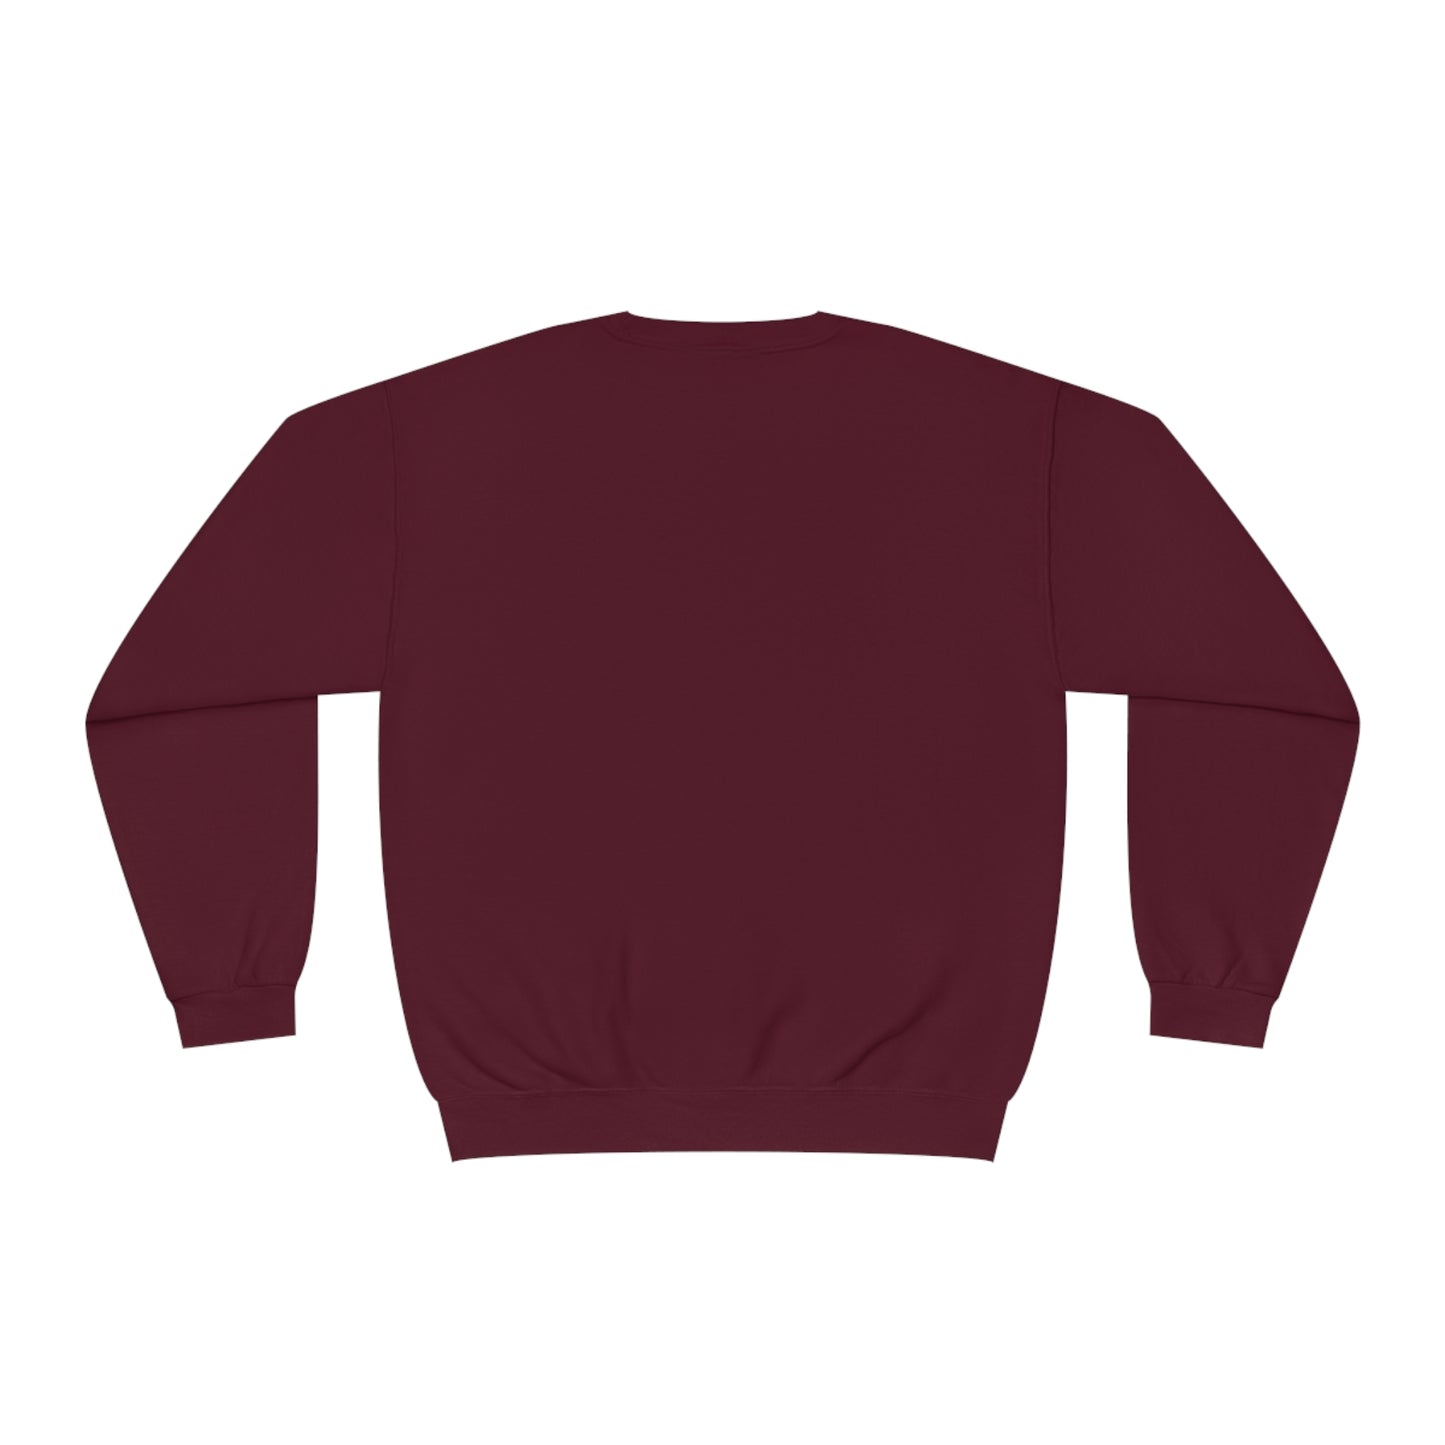 Basic Squatch NuBlend® Crewneck Sweatshirt